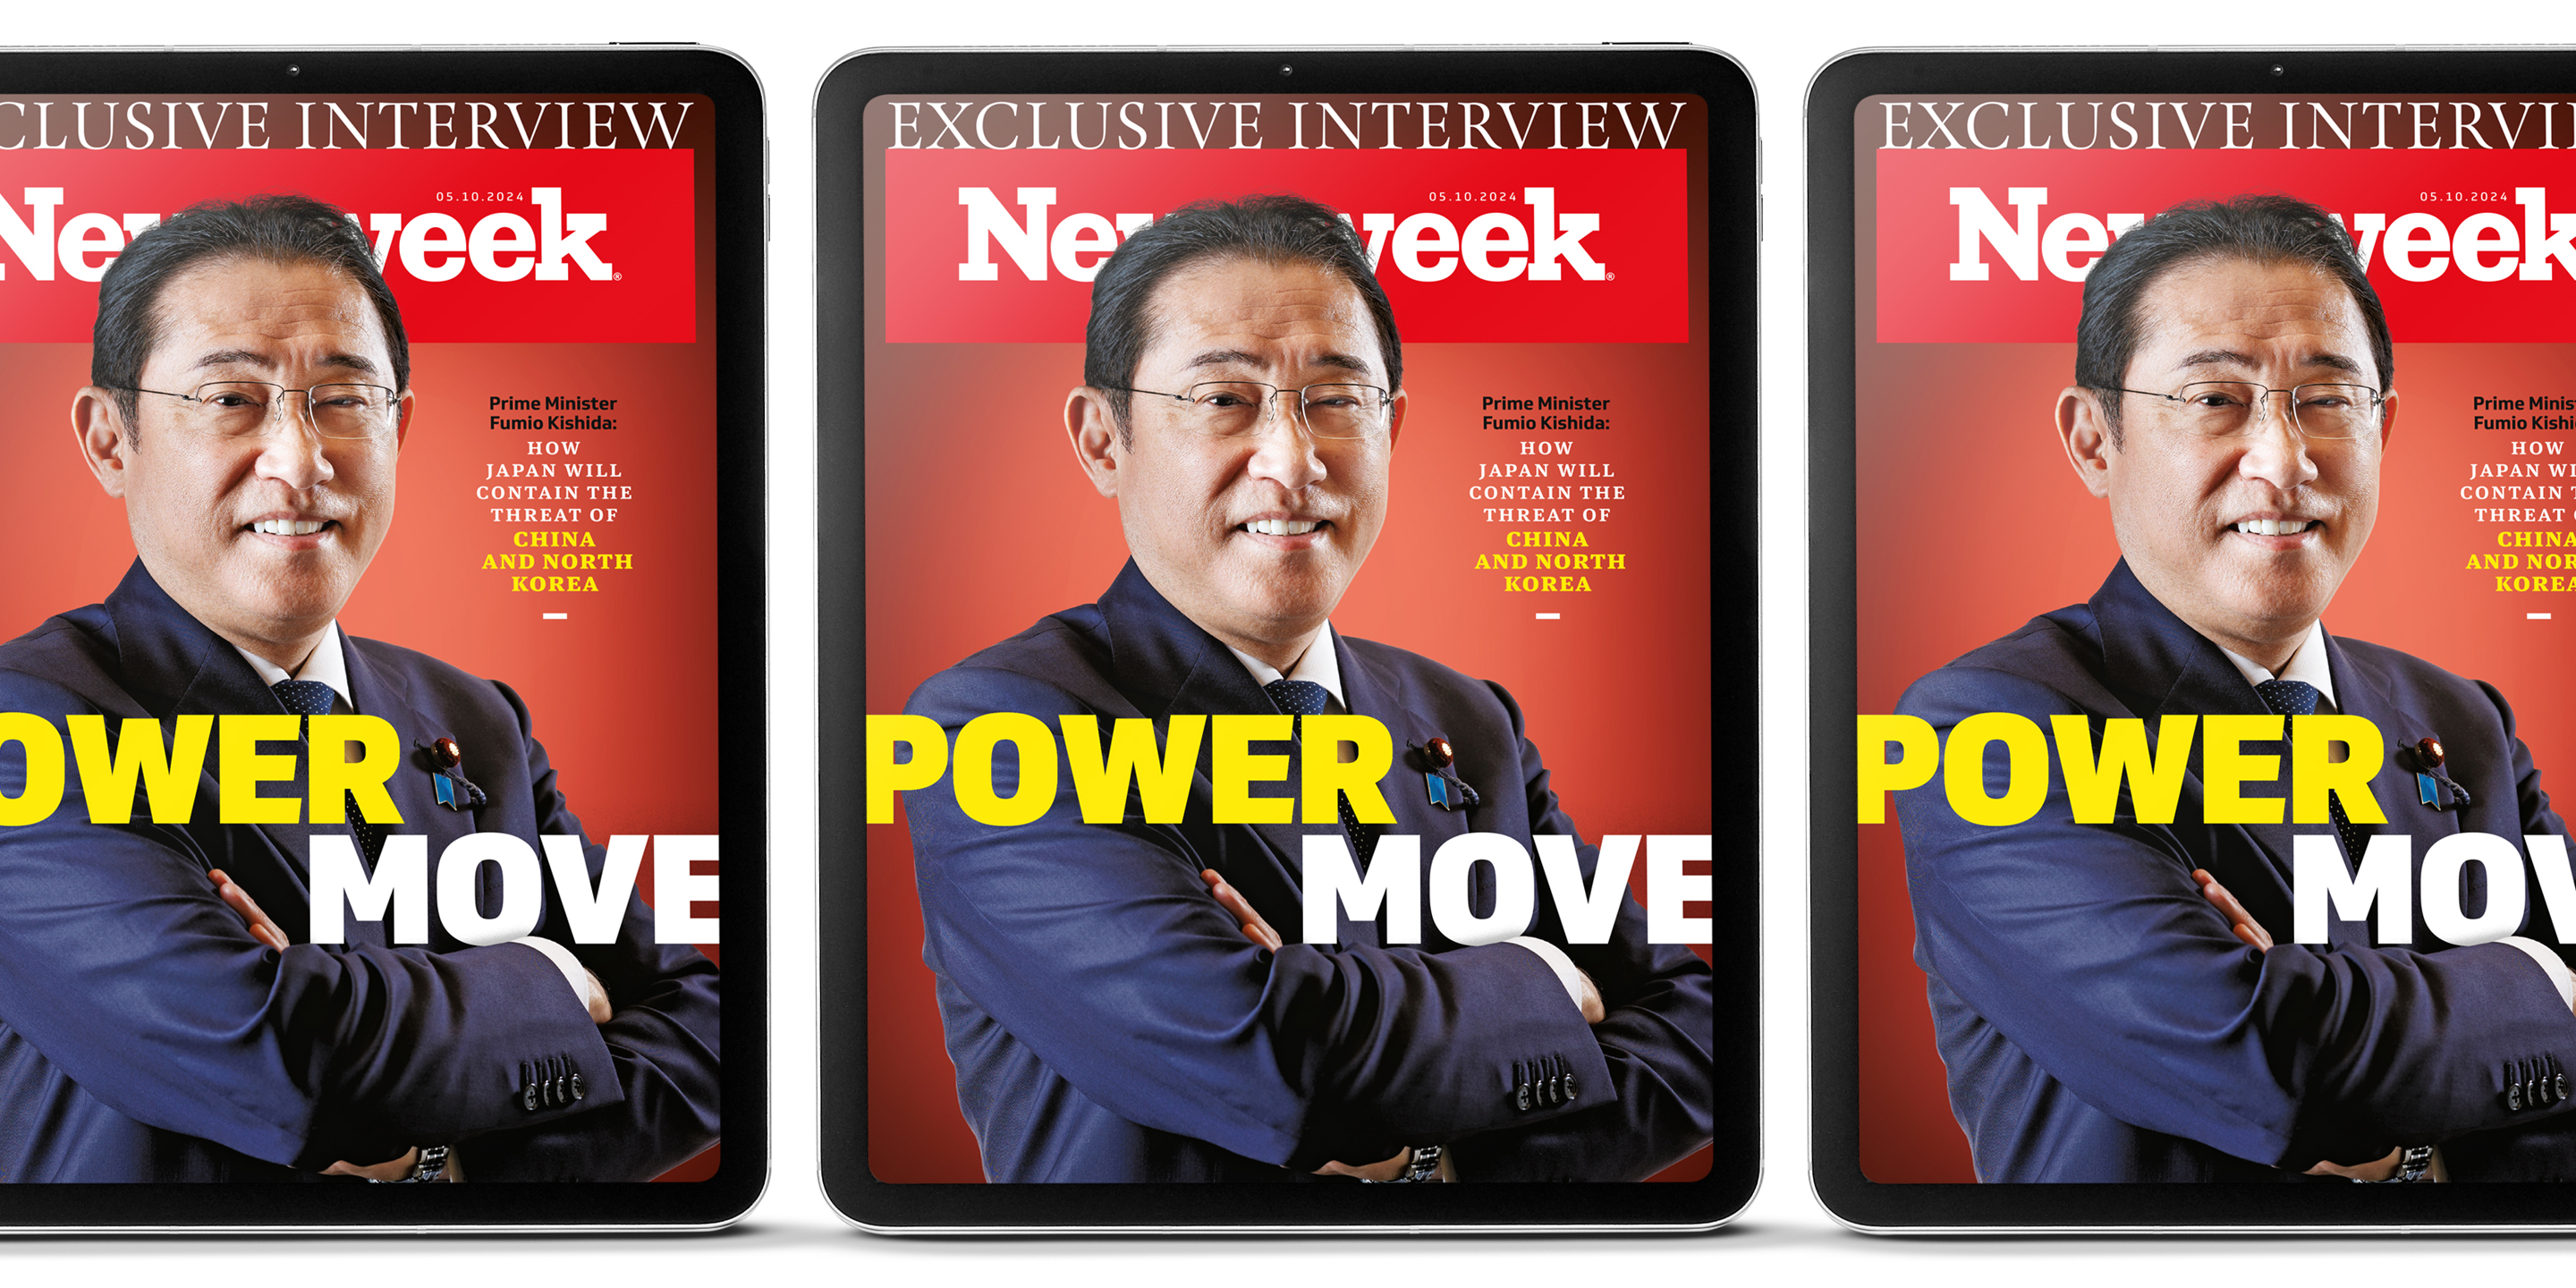 Japan’s leader Fumio Kishida on countering threat of China and North Korea